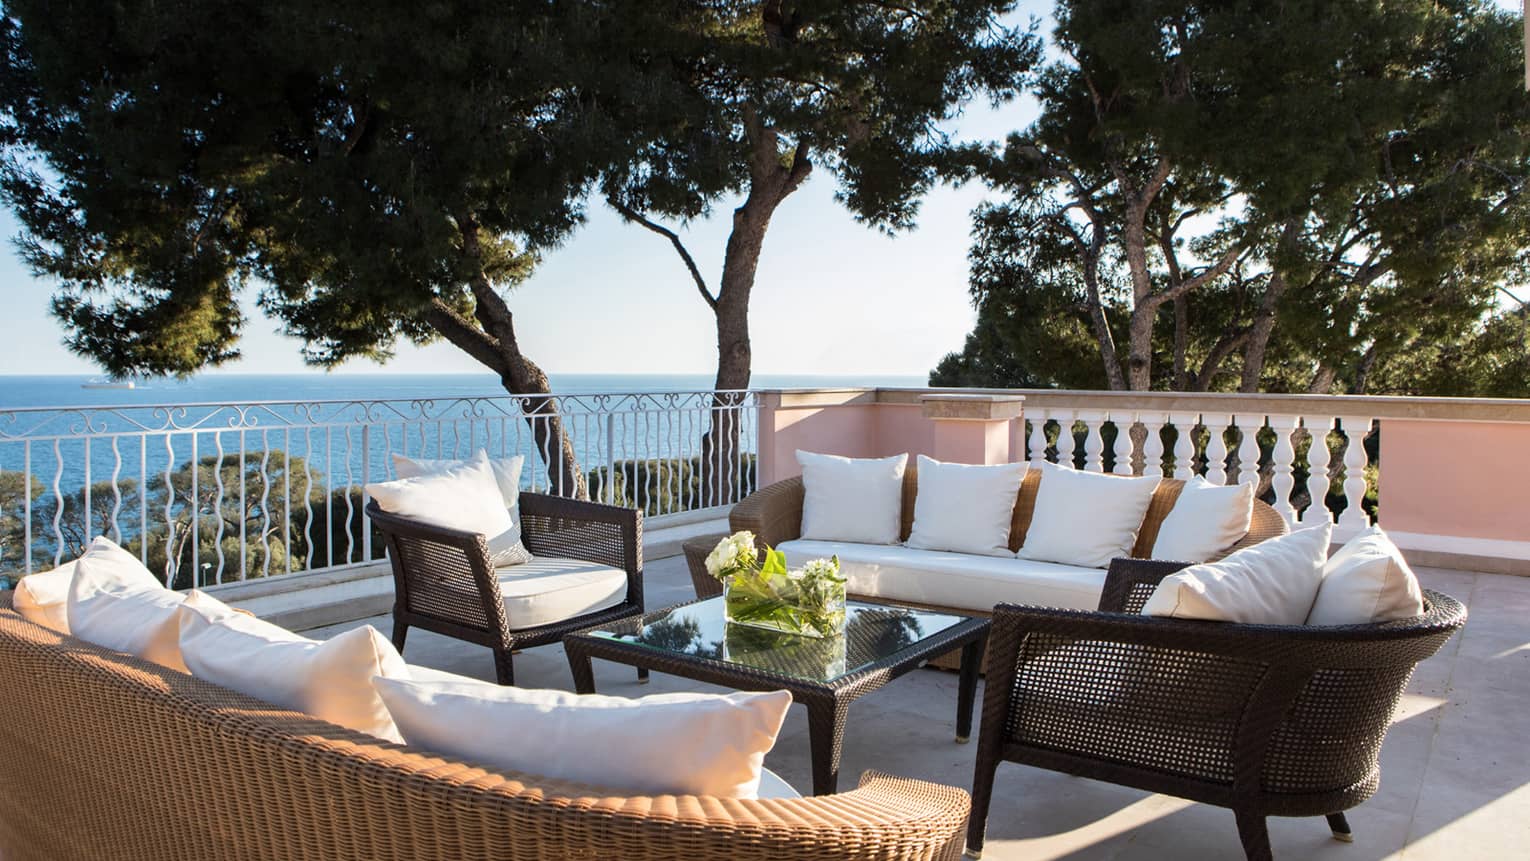 Plush patio sofas, chairs on veranda by trees, Mediterranean Sea views